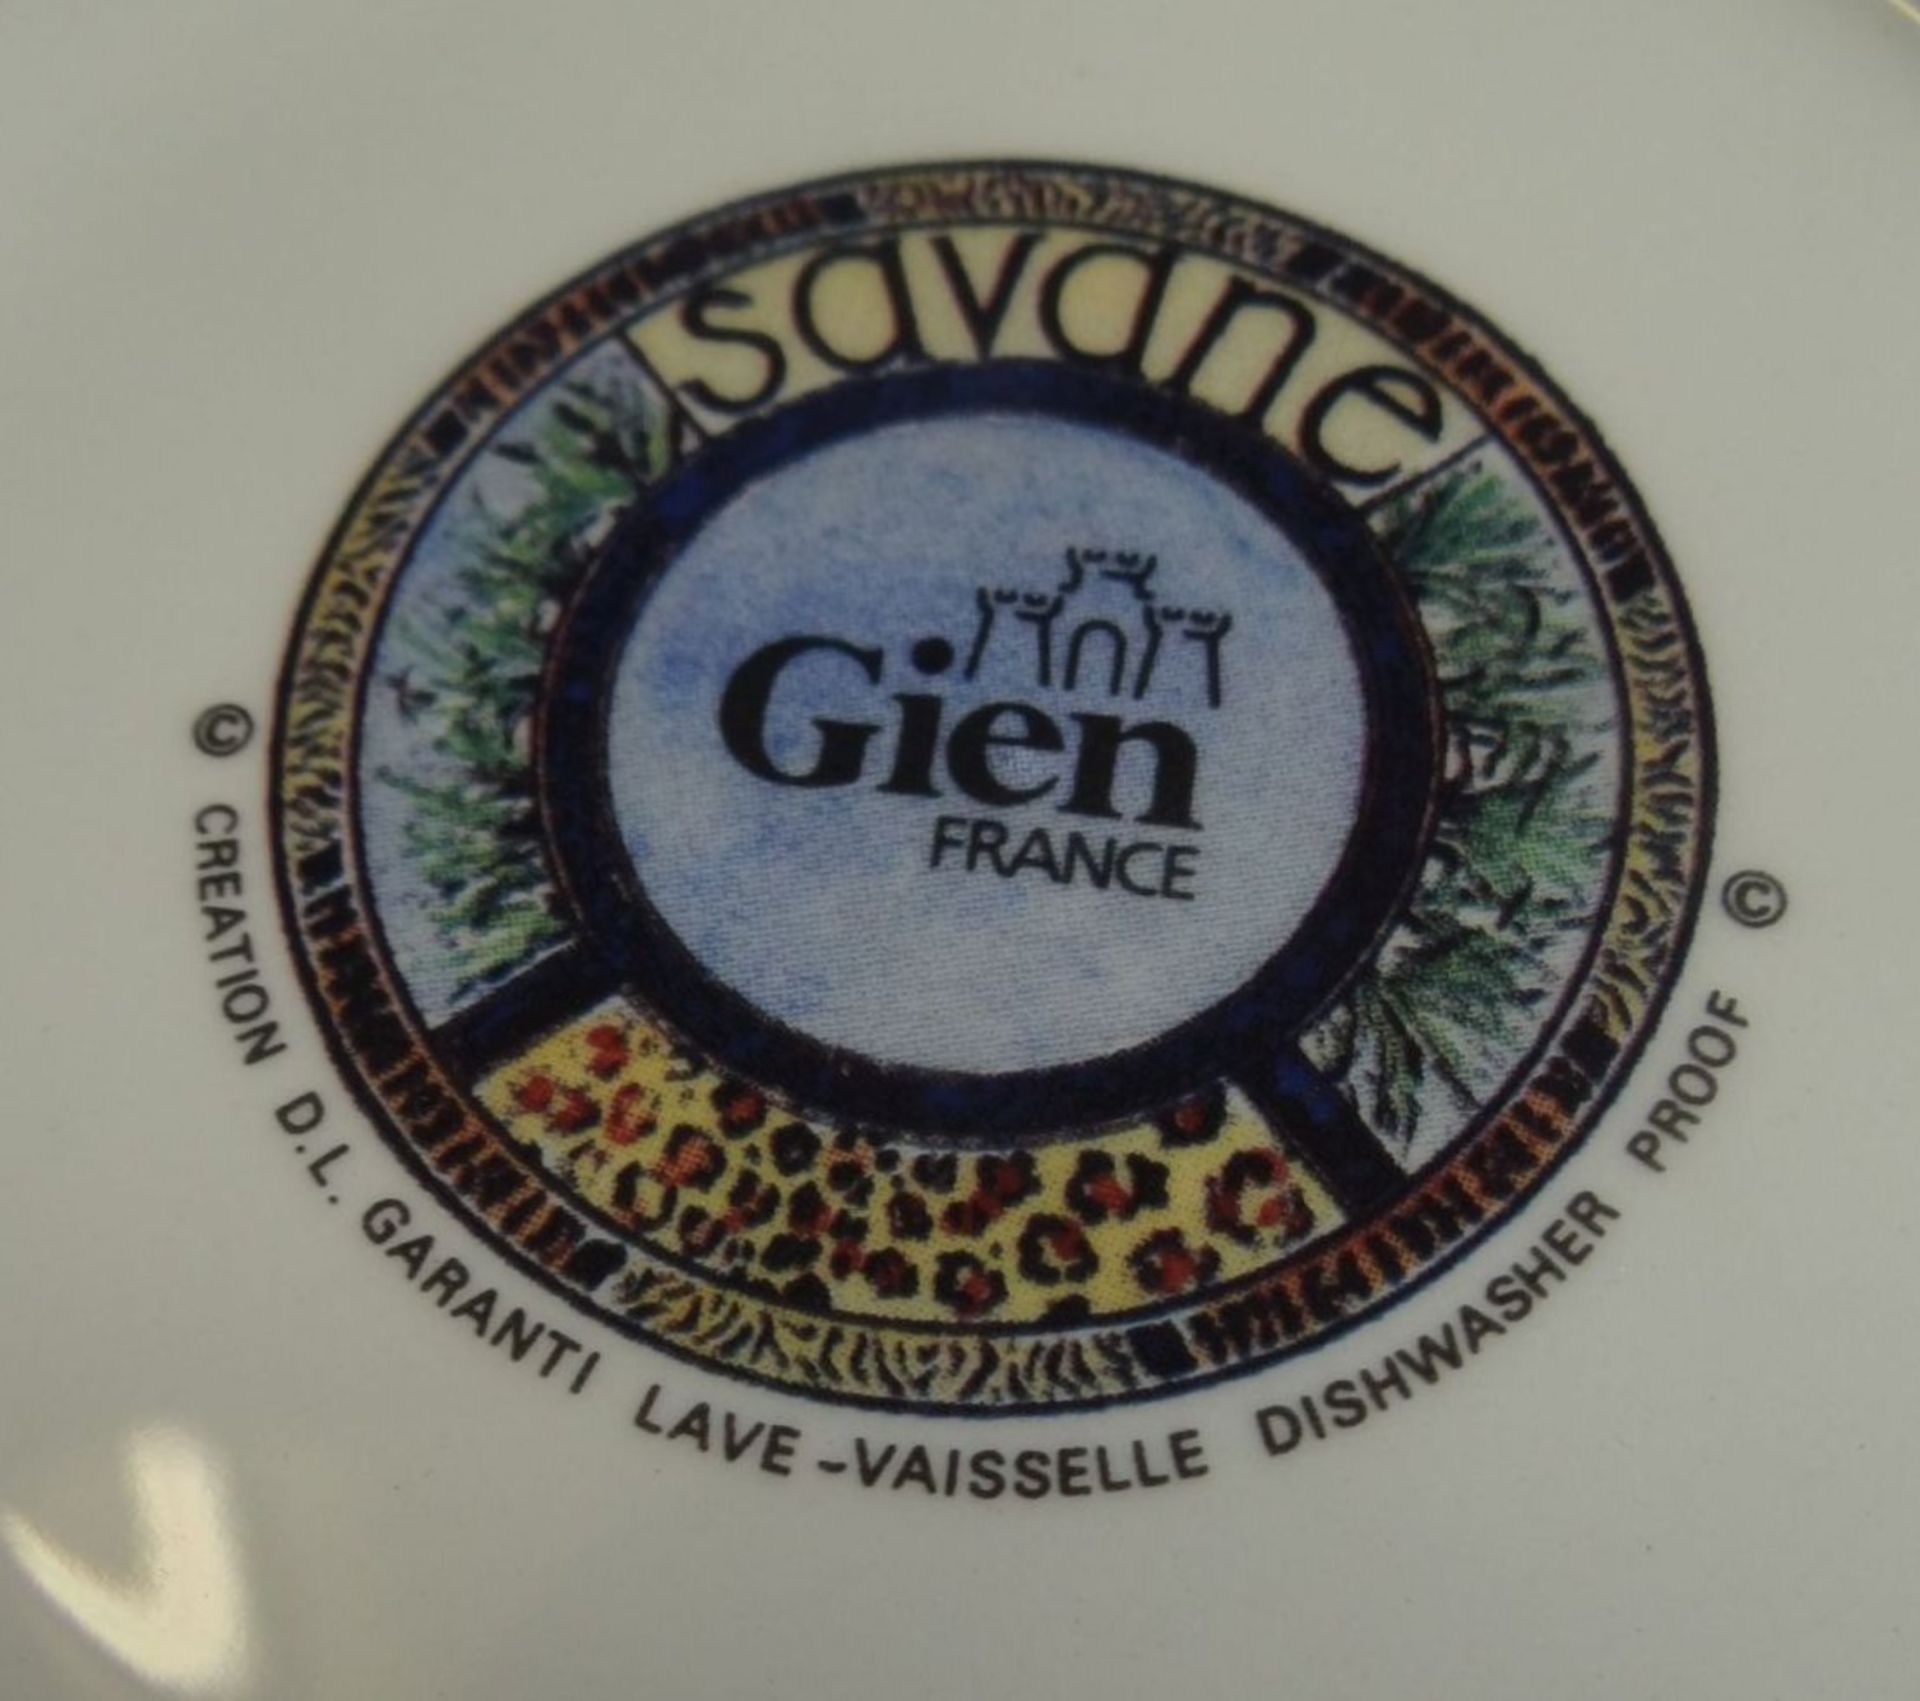 6 Mittelteller "Gien" France, Dekor Savane, D-16,5 cm in OVP - Bild 6 aus 6